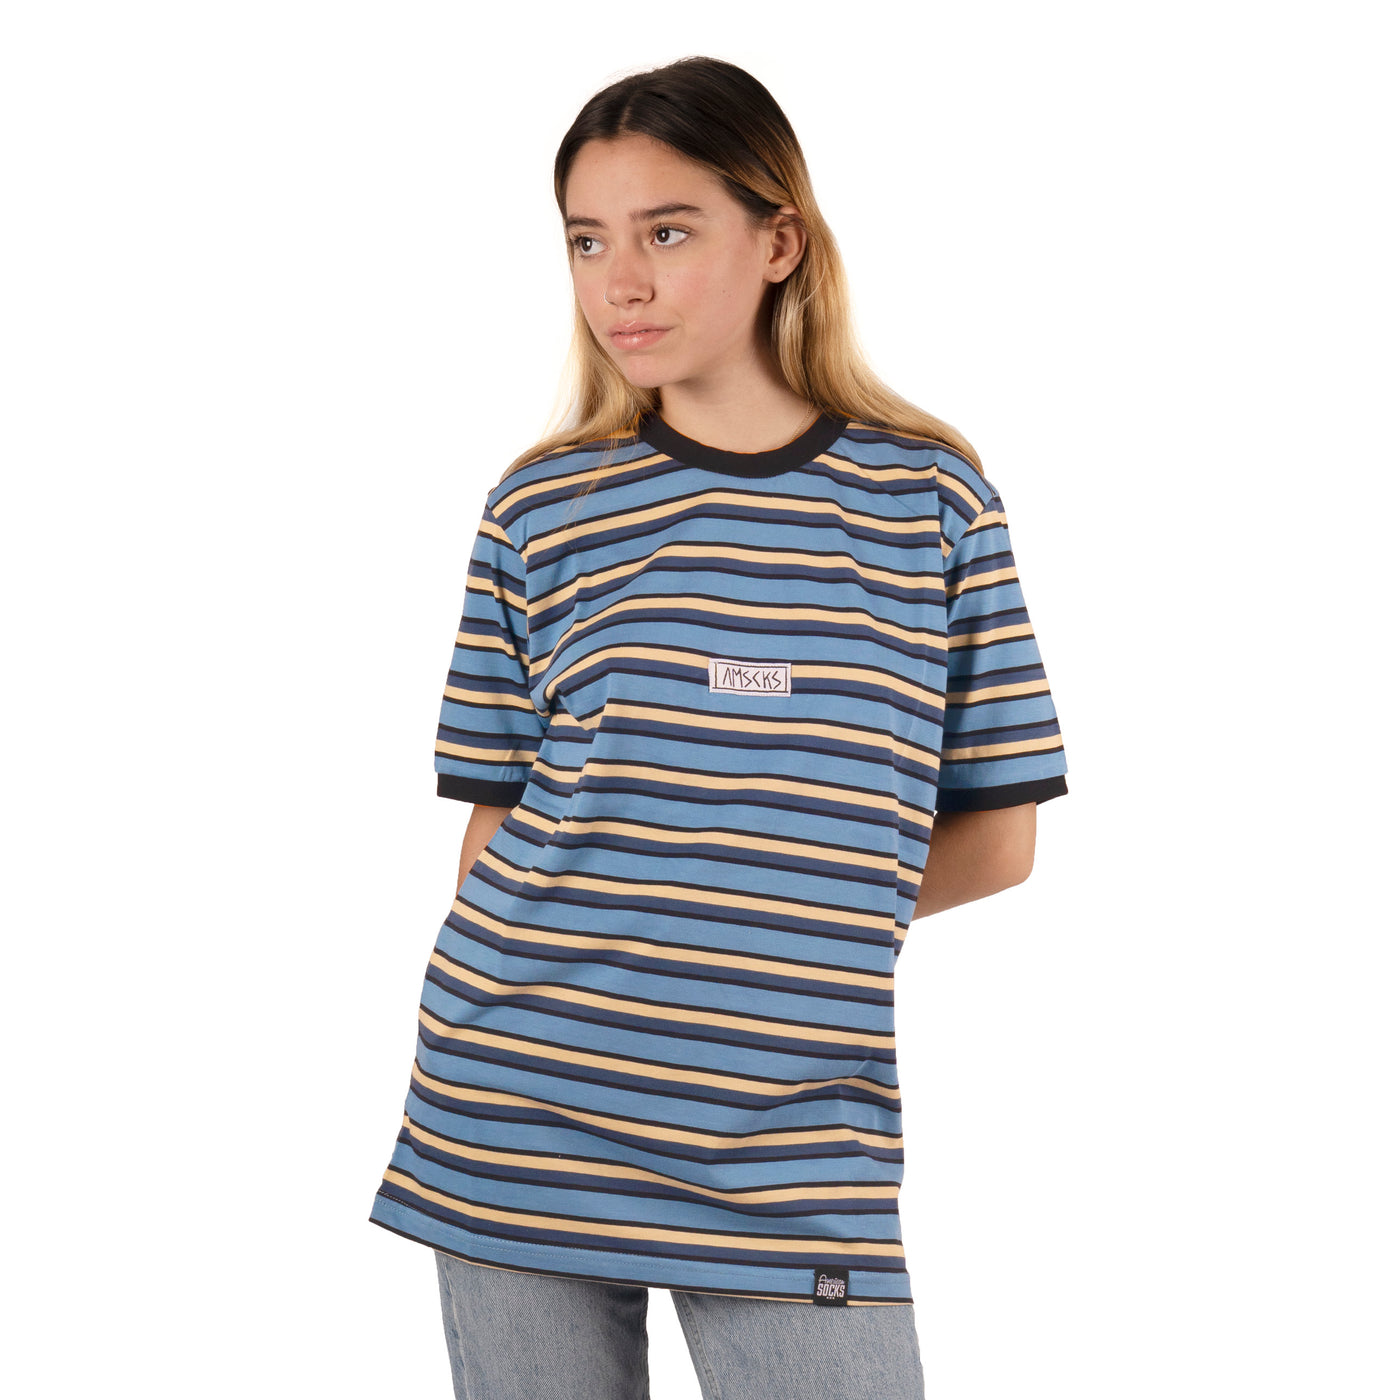 AMSCKS Striped Blue - Camiseta